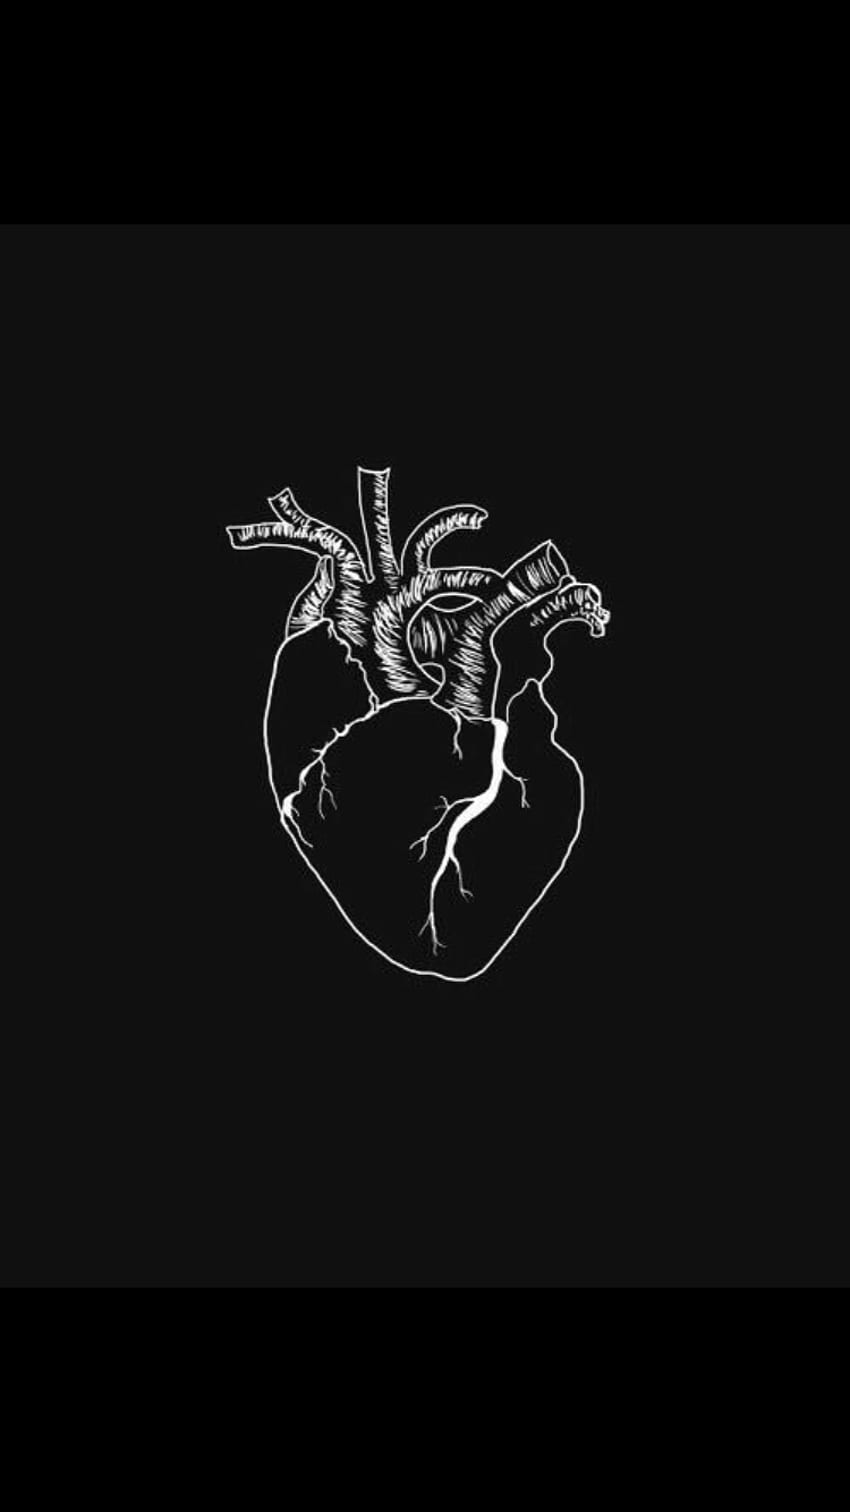 The heart of a man - Black heart